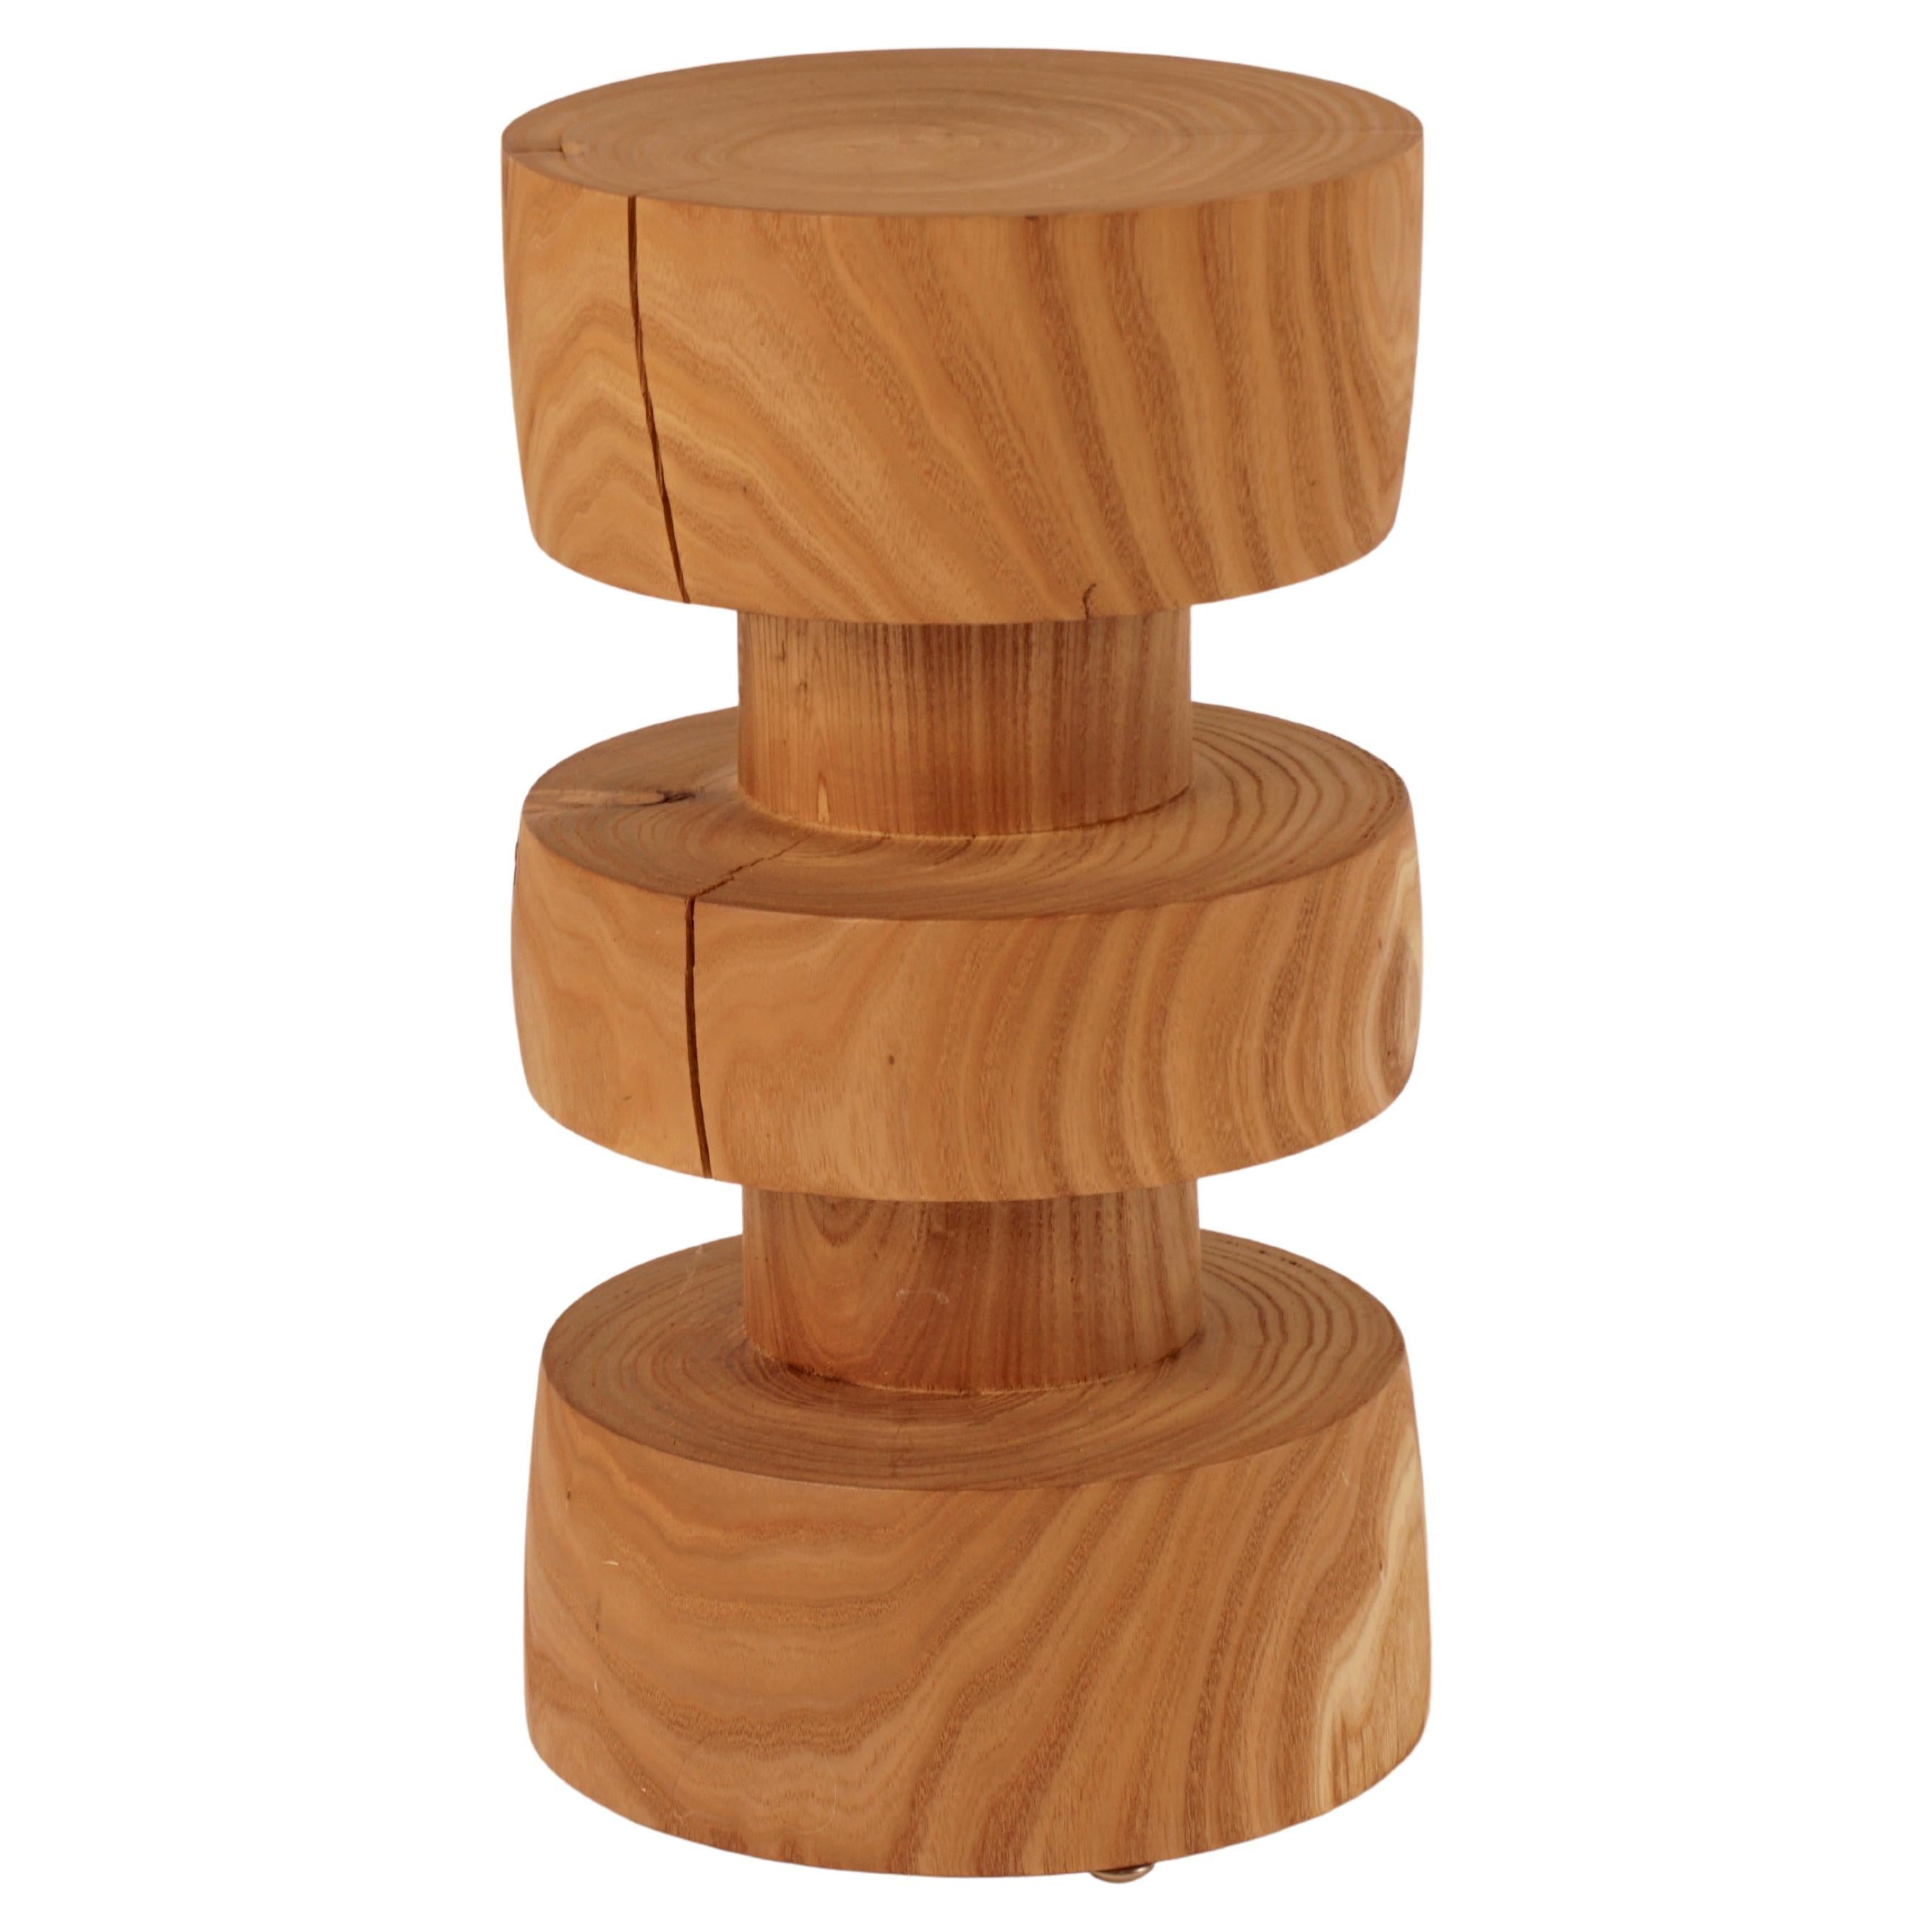 Turned Wooden Mini-Pedestal Table #4 in Catalpa